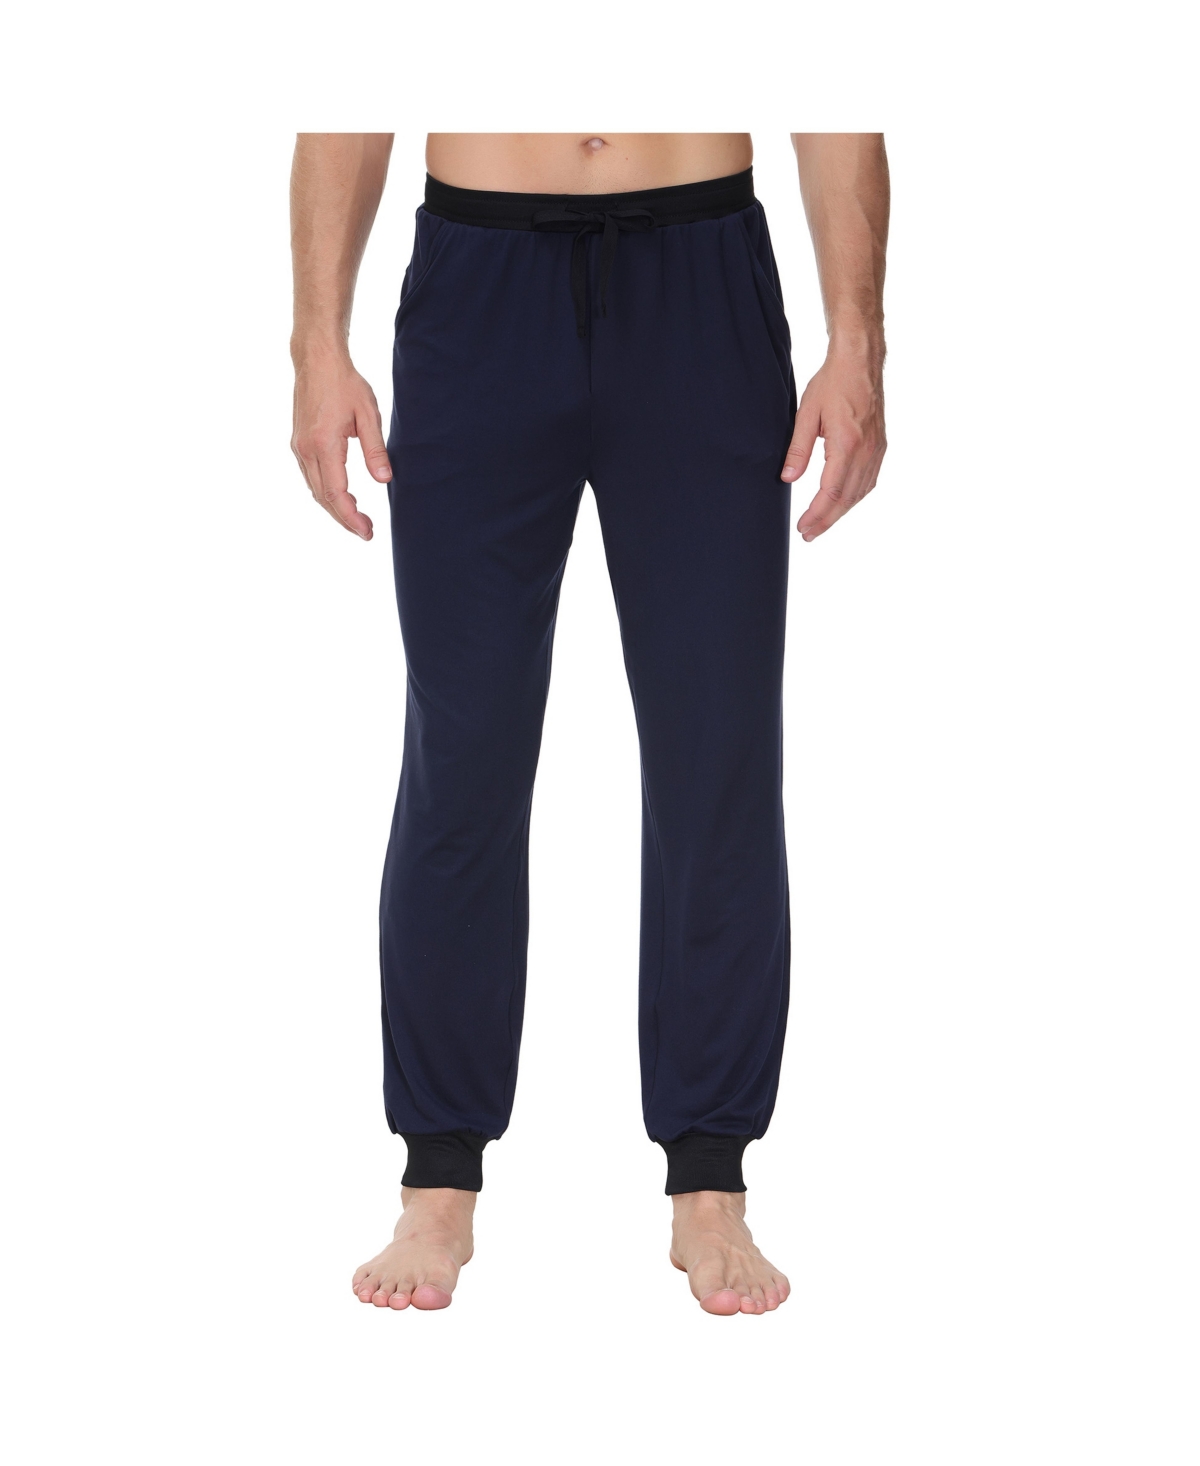 Men's Heat Retaining Contrast Trim Pajama Pants - Light Blue